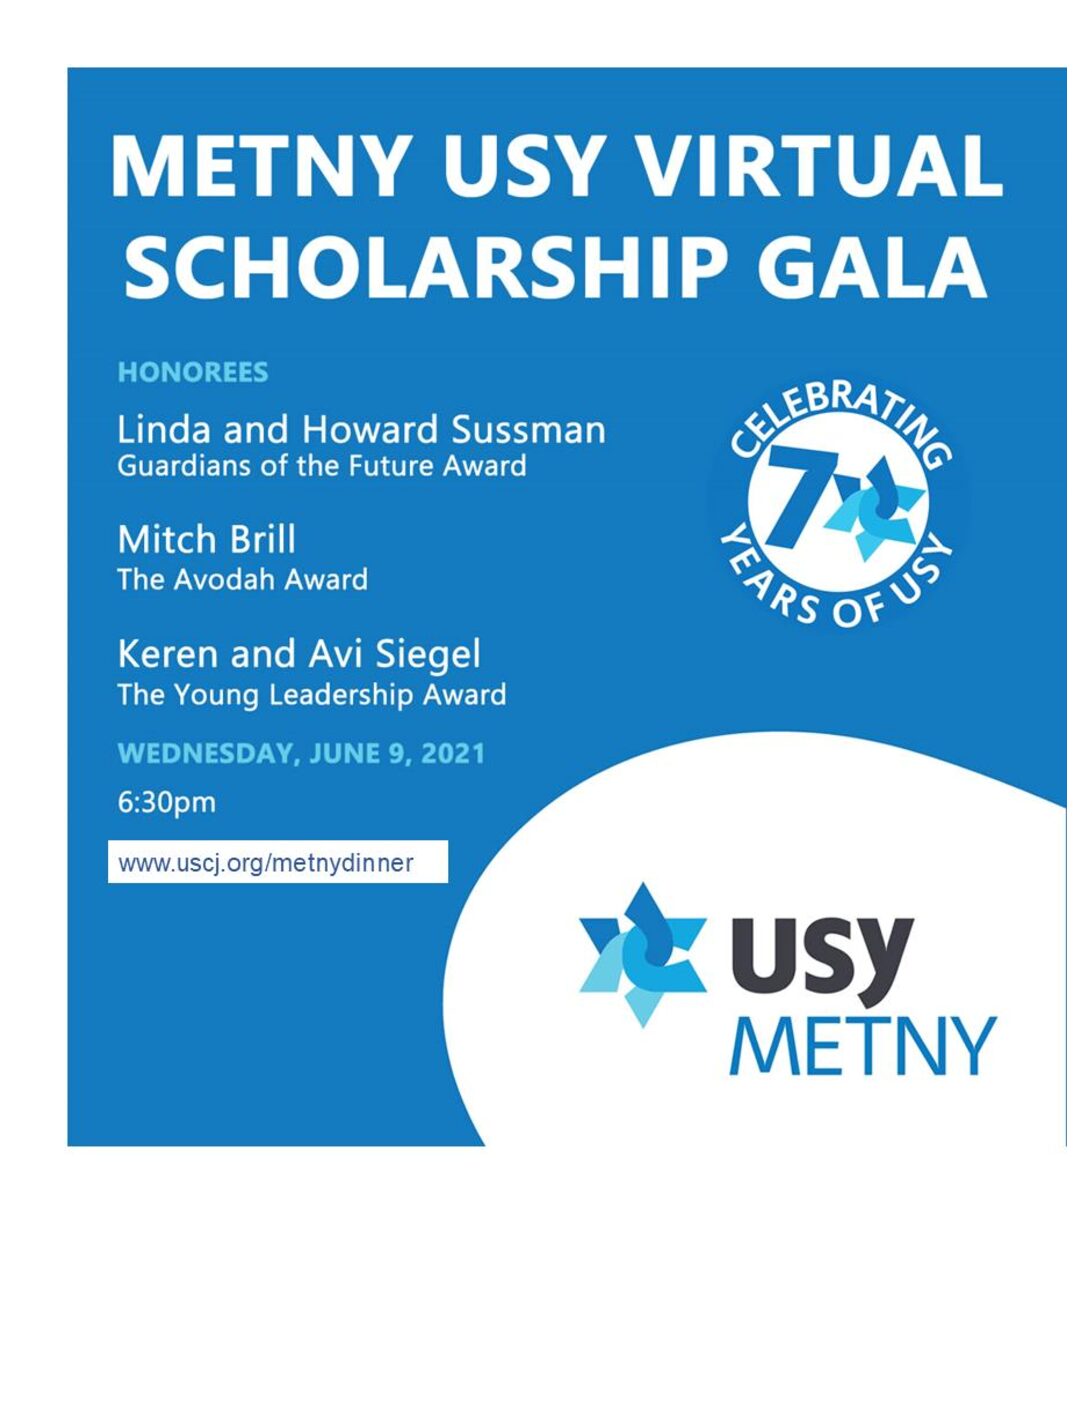 USY Annual Scholarship Gala